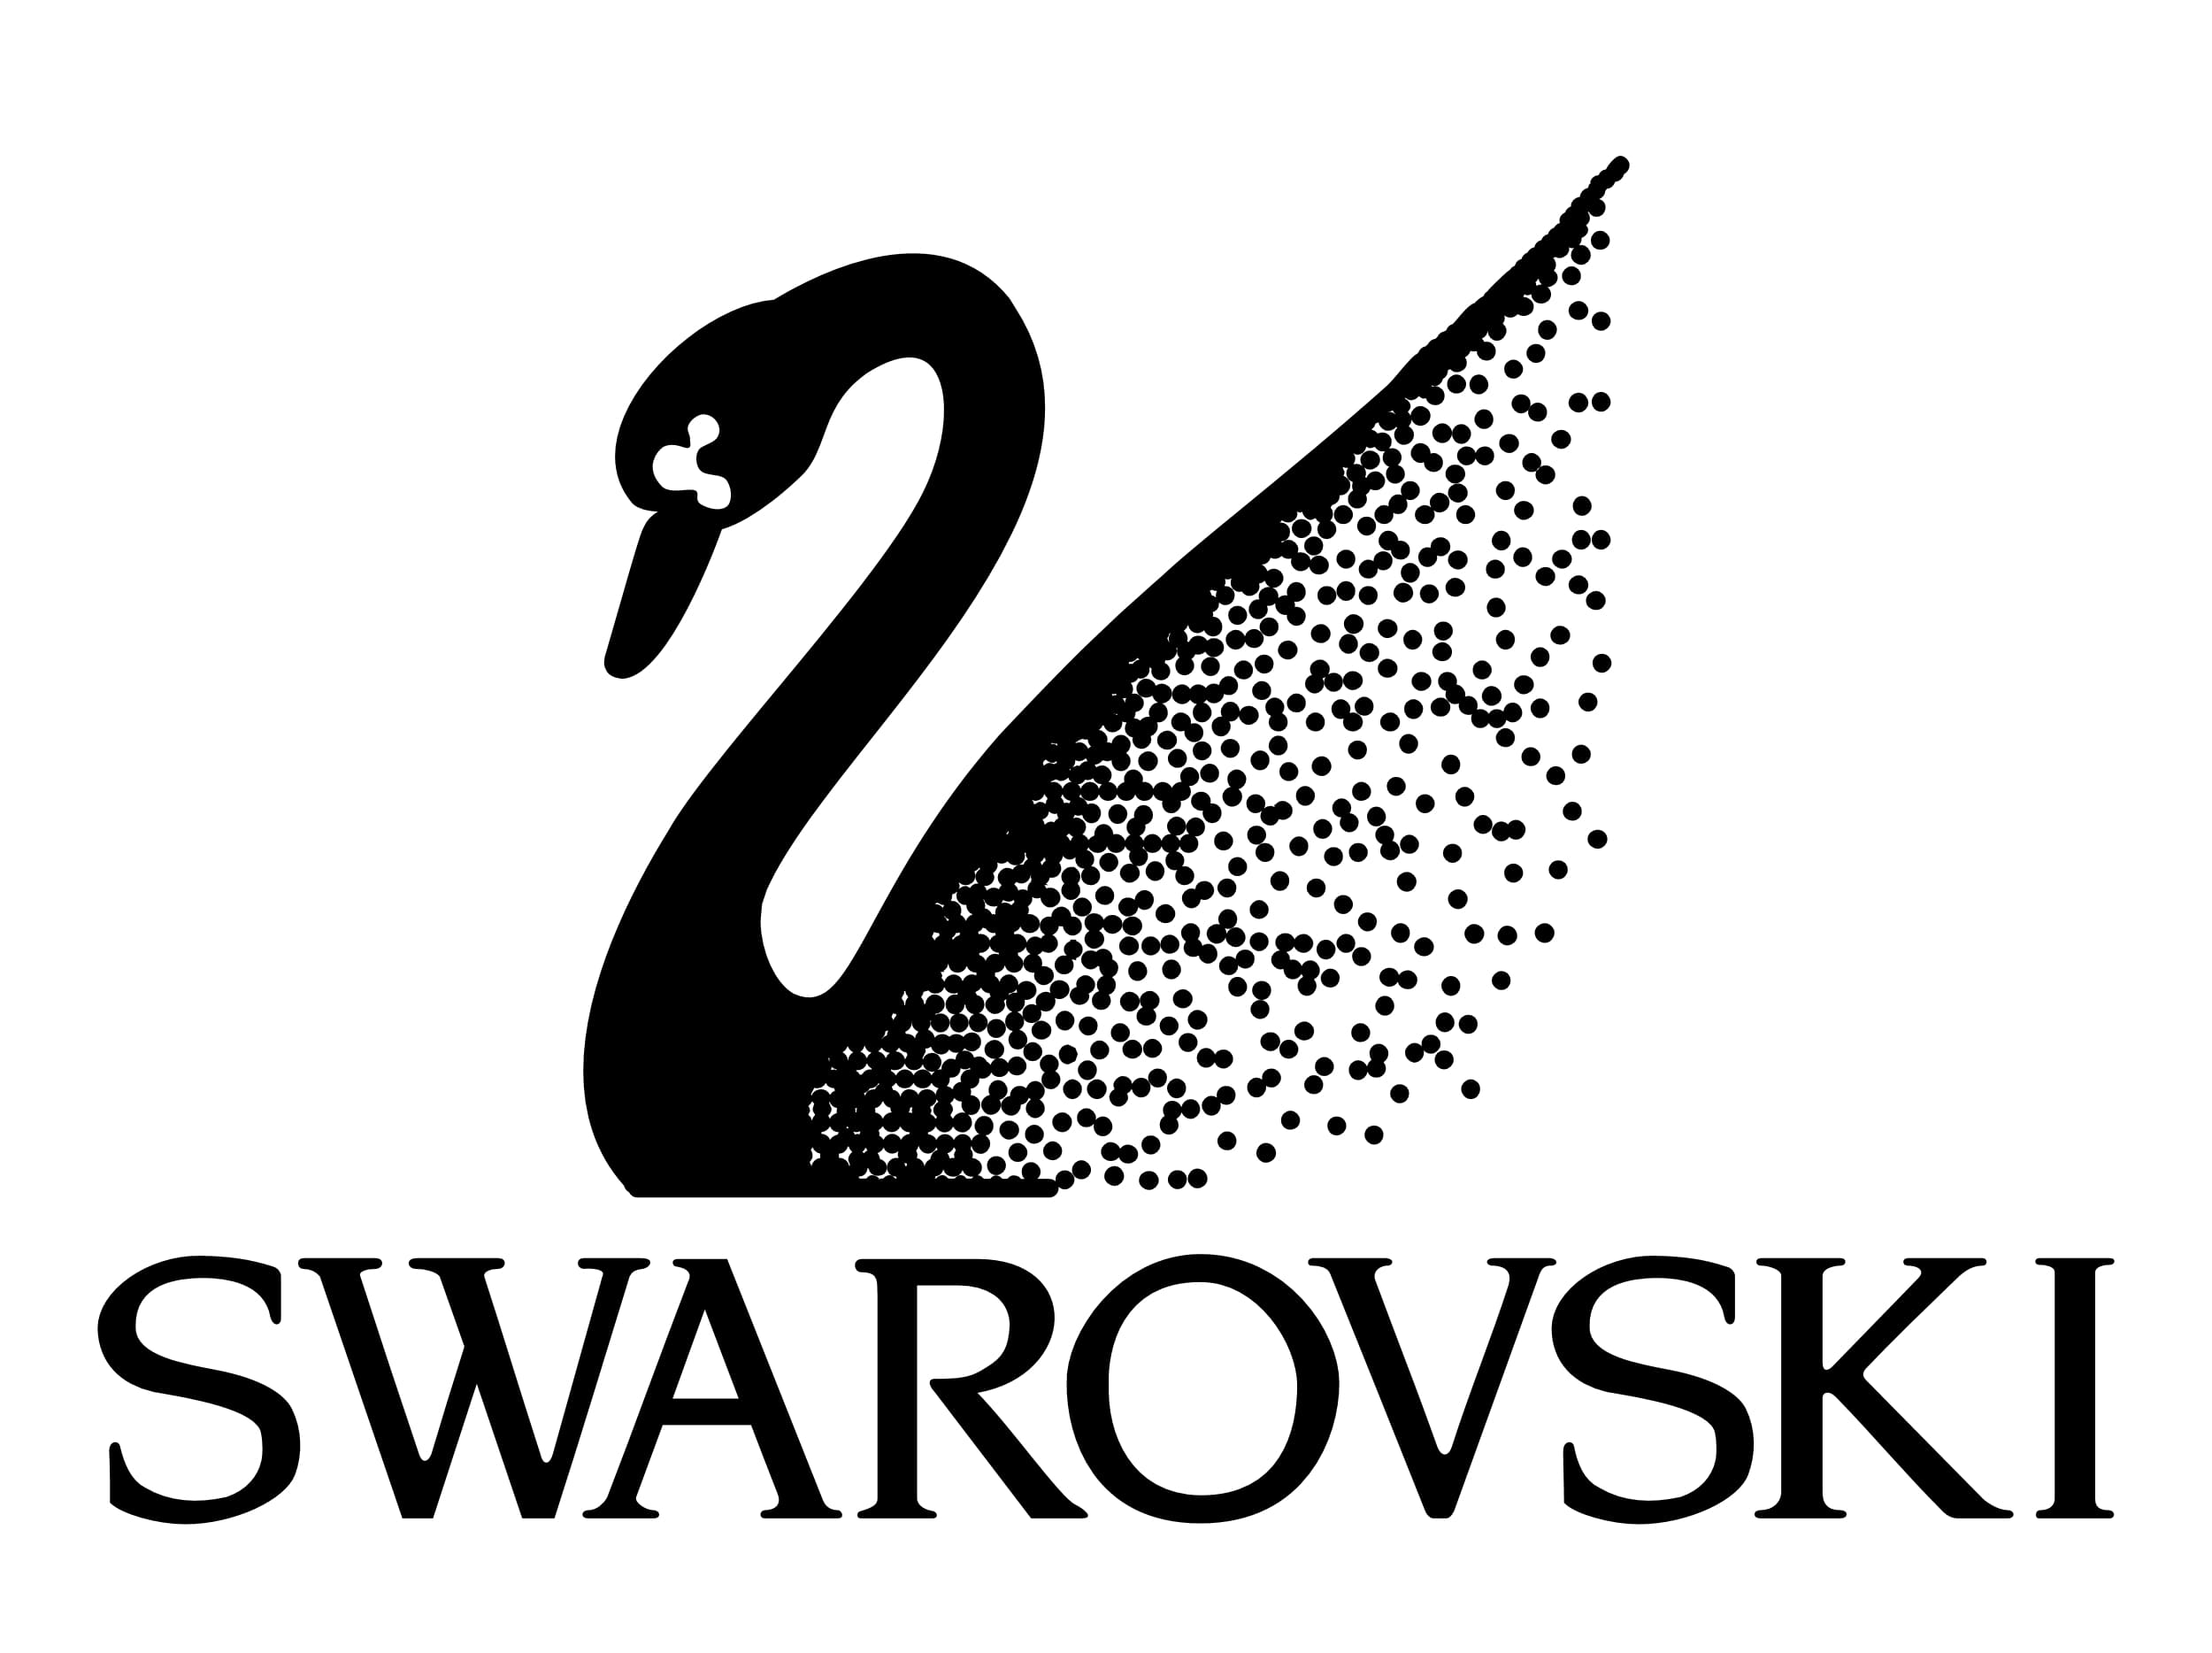 Swarovski logo - Marques et logos: histoire et signification | PNG